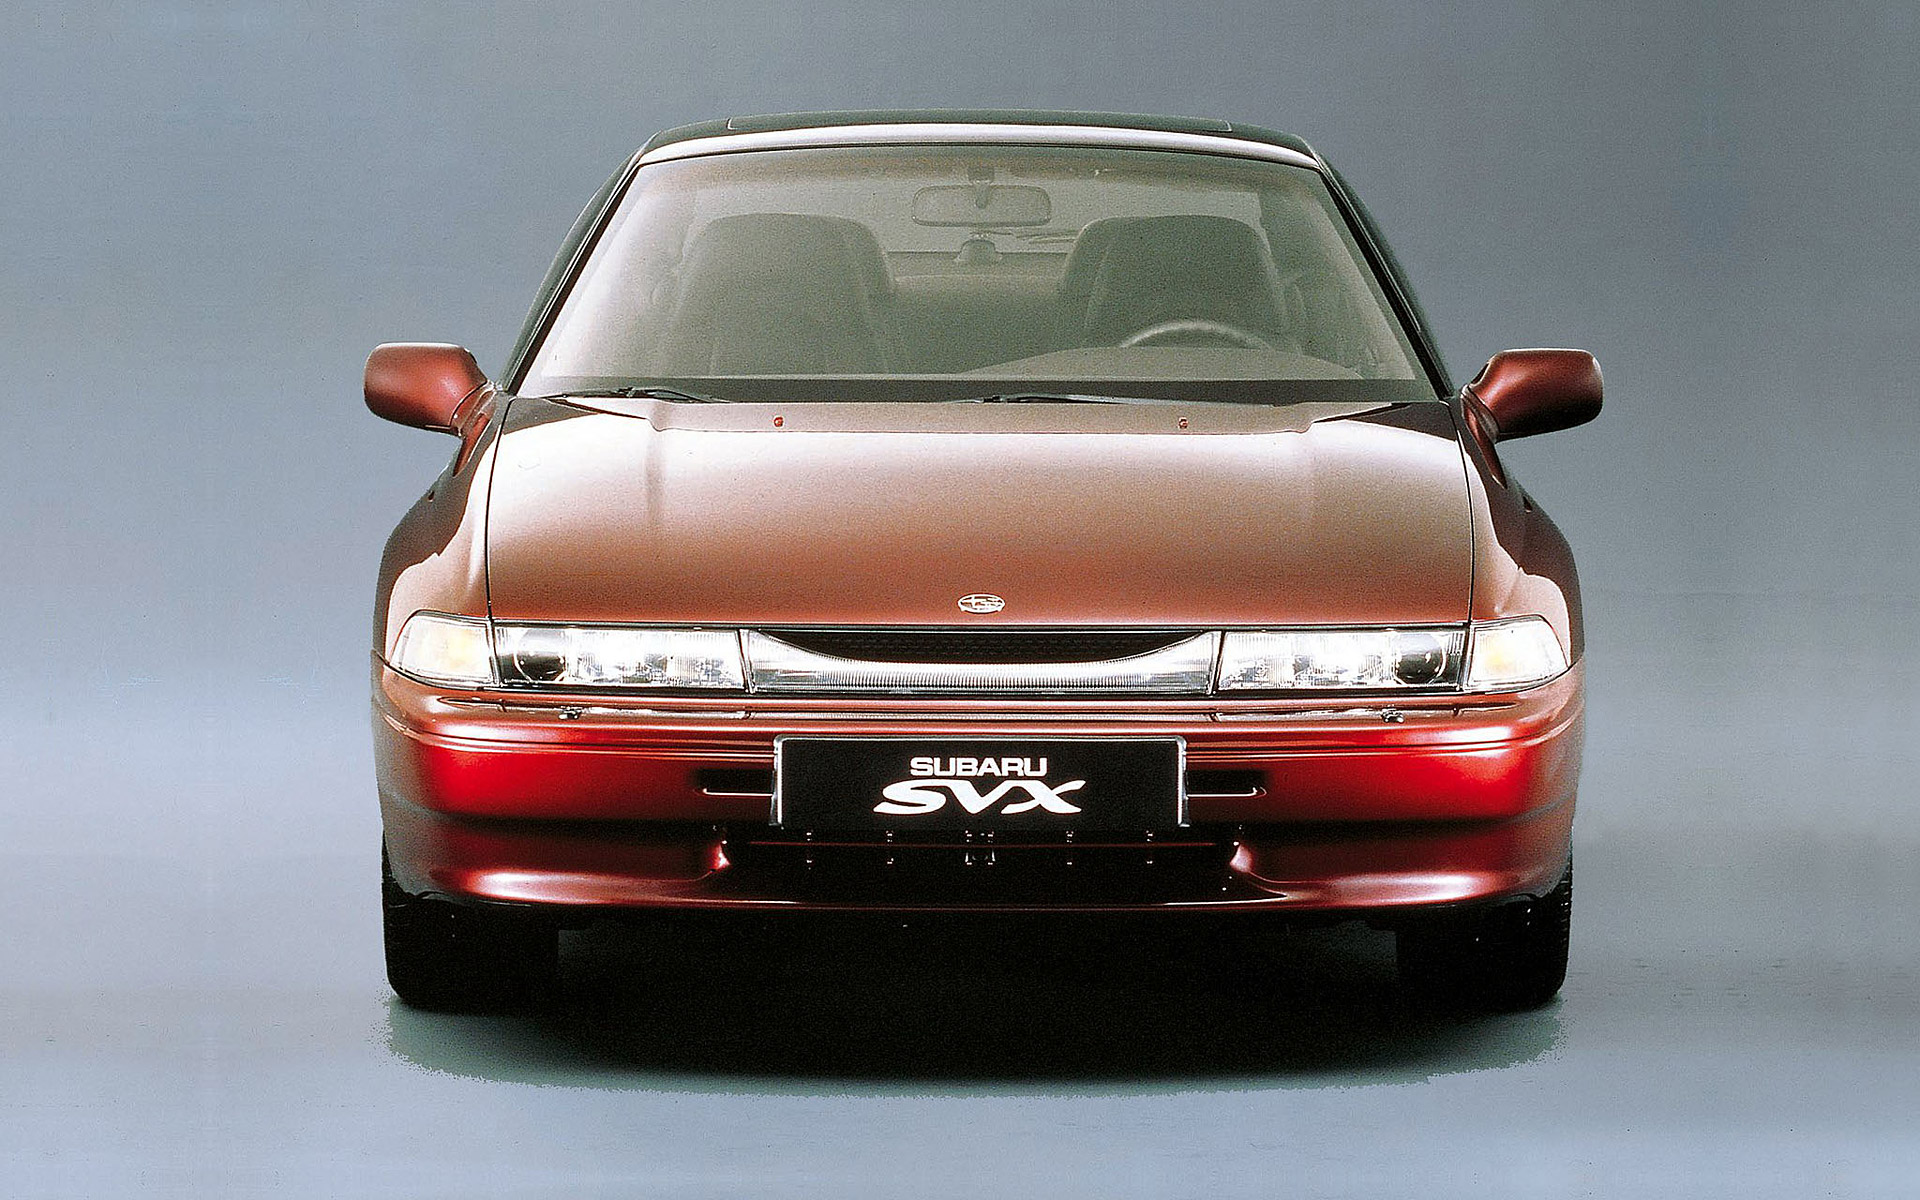  1992 Subaru SVX Wallpaper.